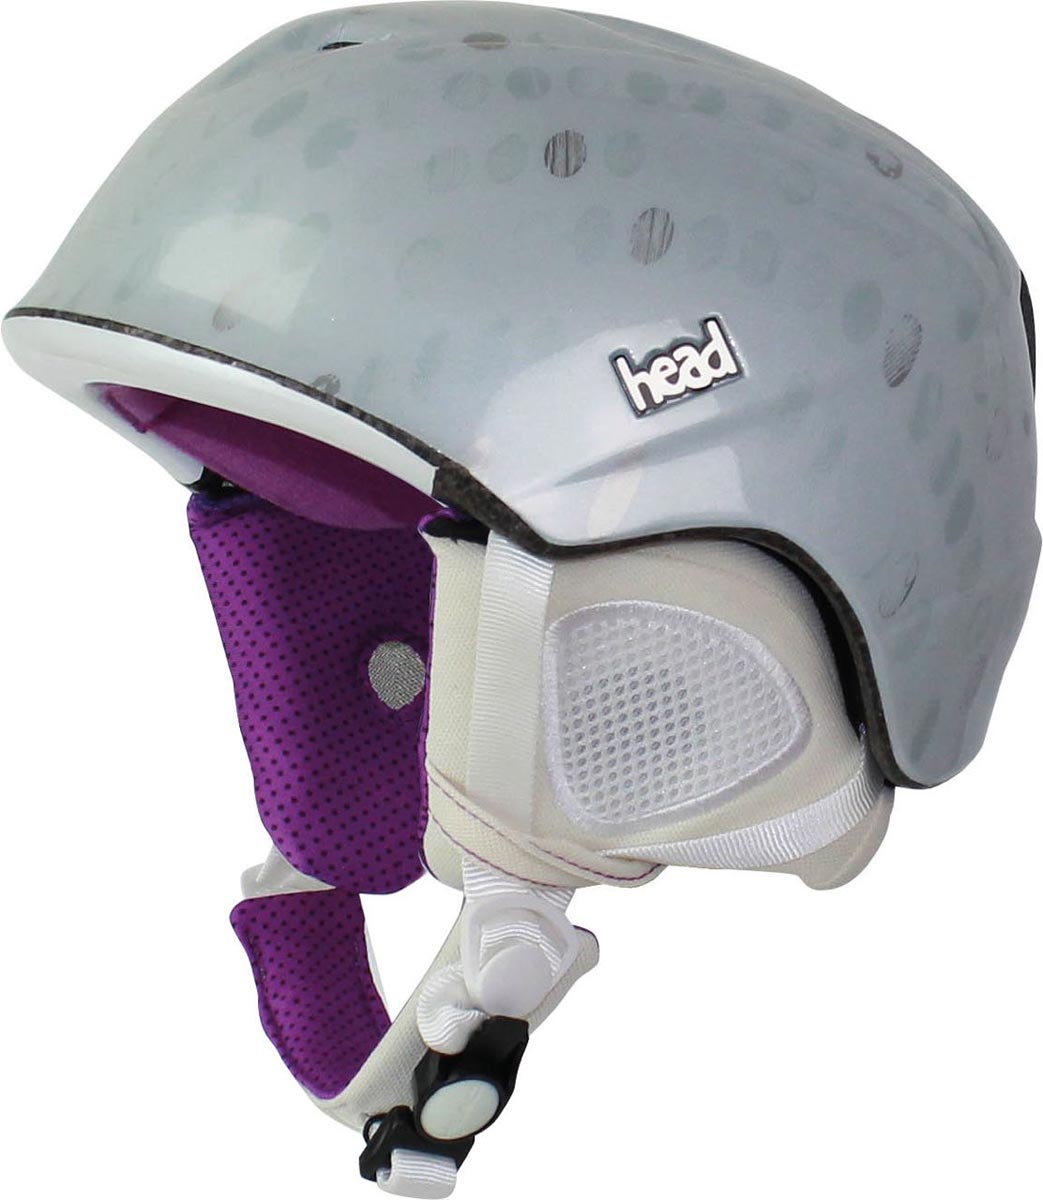 CLOE - Women’s ski helmet